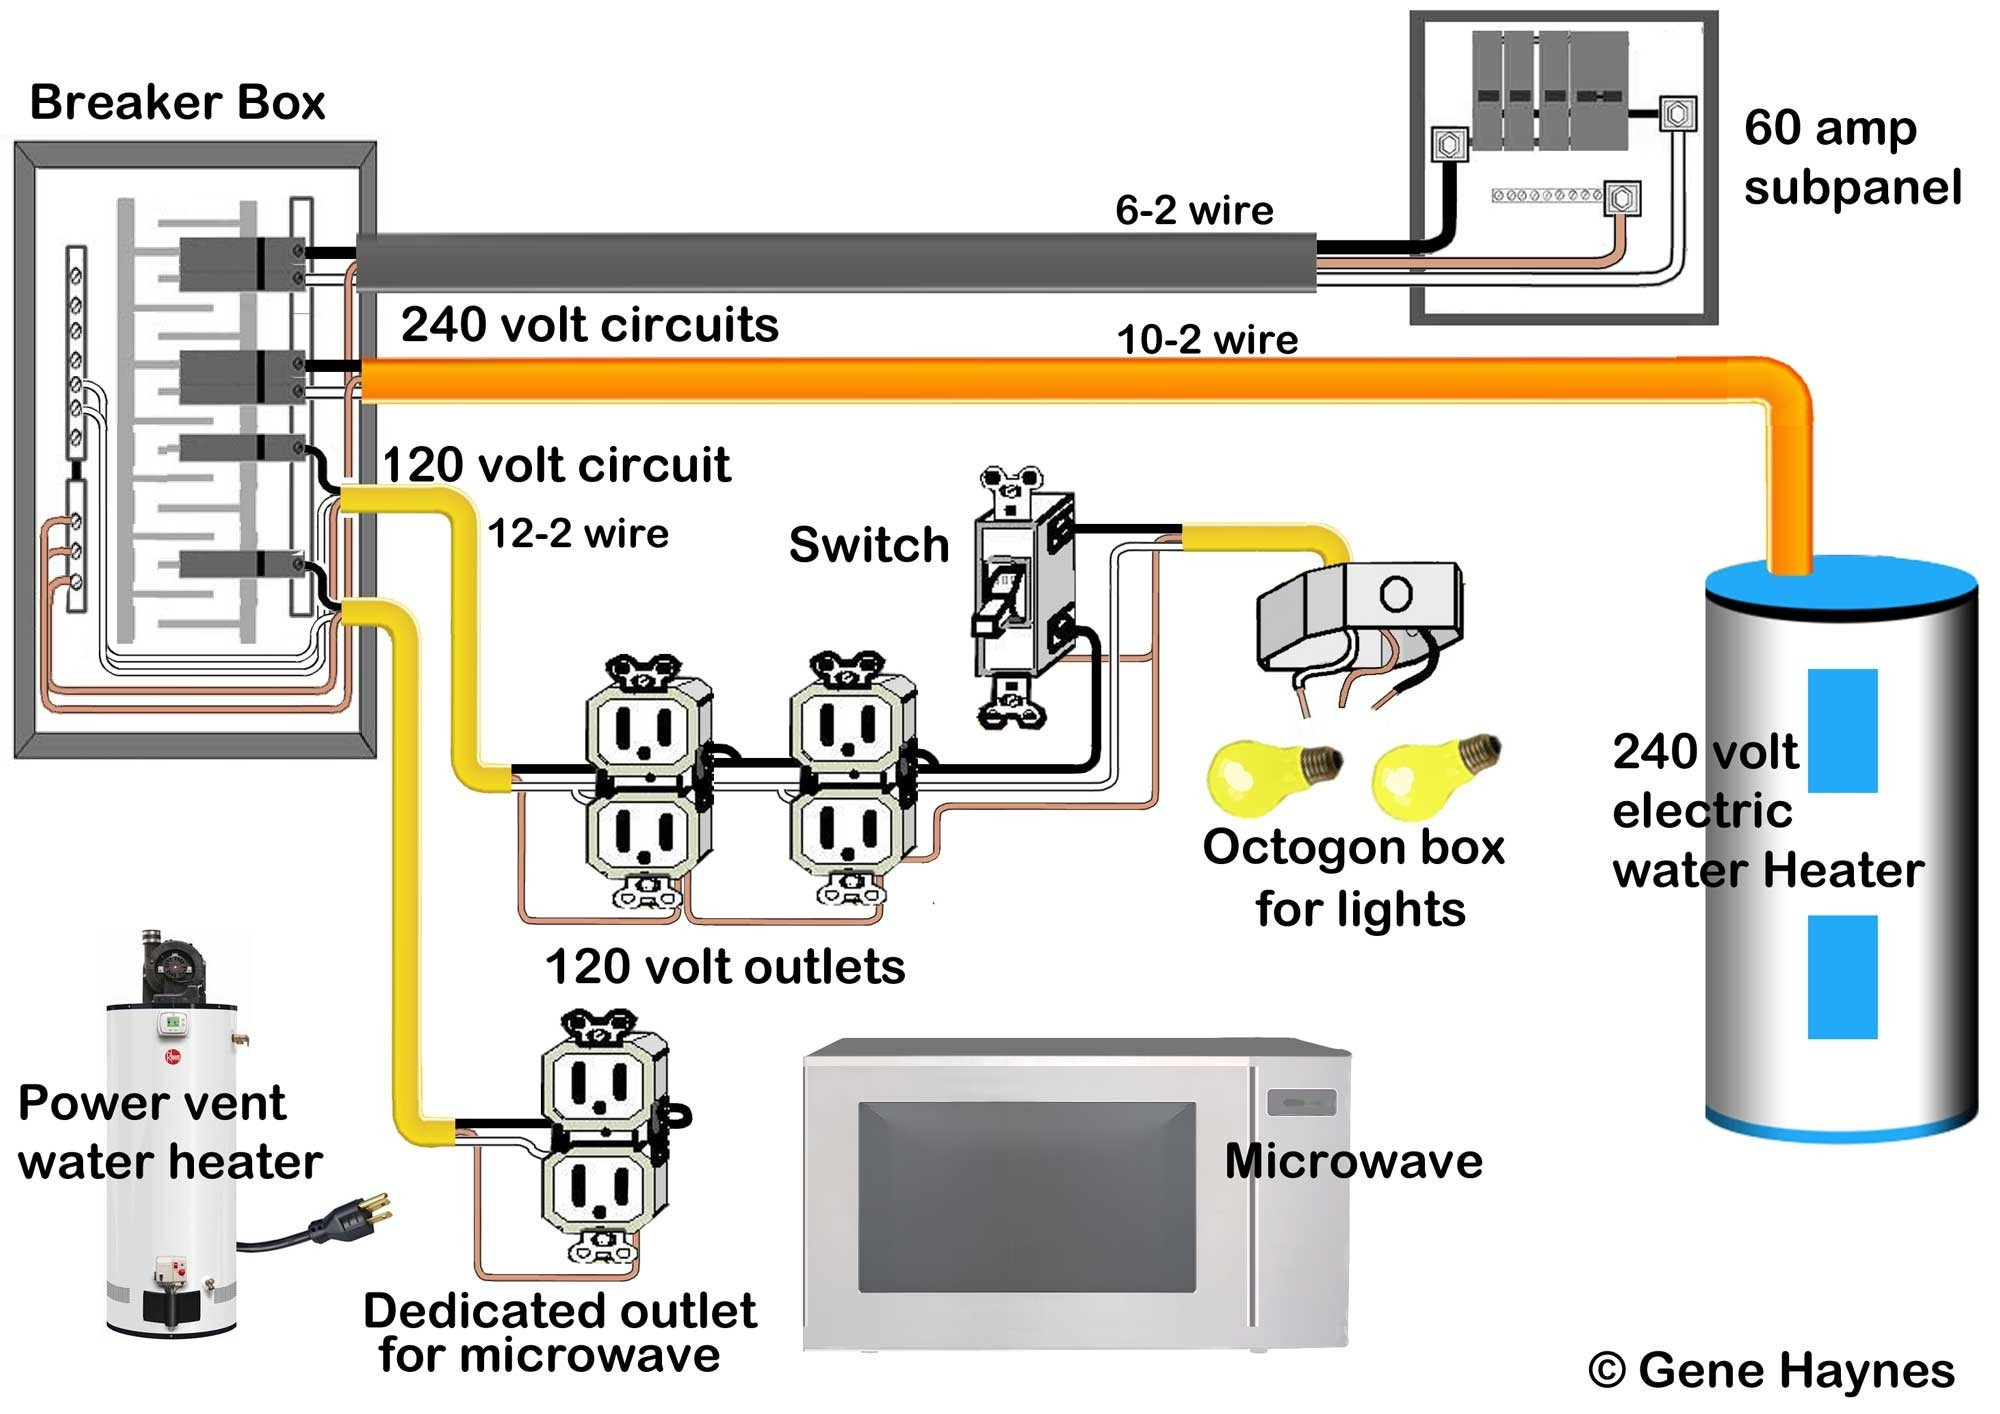 100 Amp Sub Panel Box Wiring Diagram | Wiring Diagram - 100 Amp Sub Panel Wiring Diagram